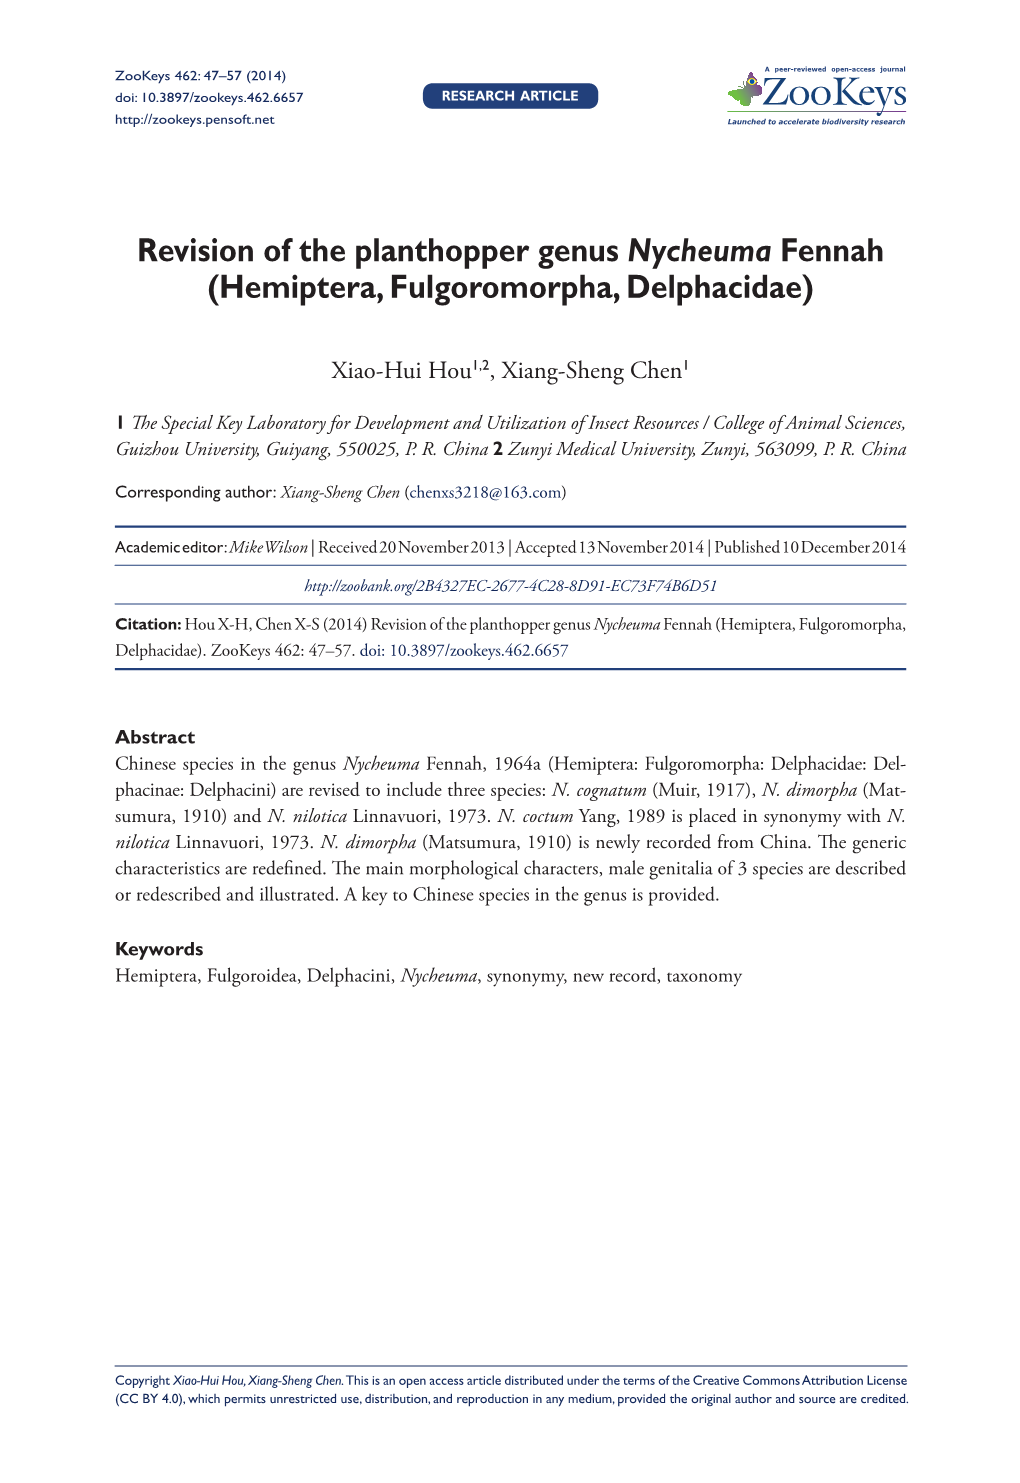 Revision of the Planthopper Genus Nycheuma Fennah